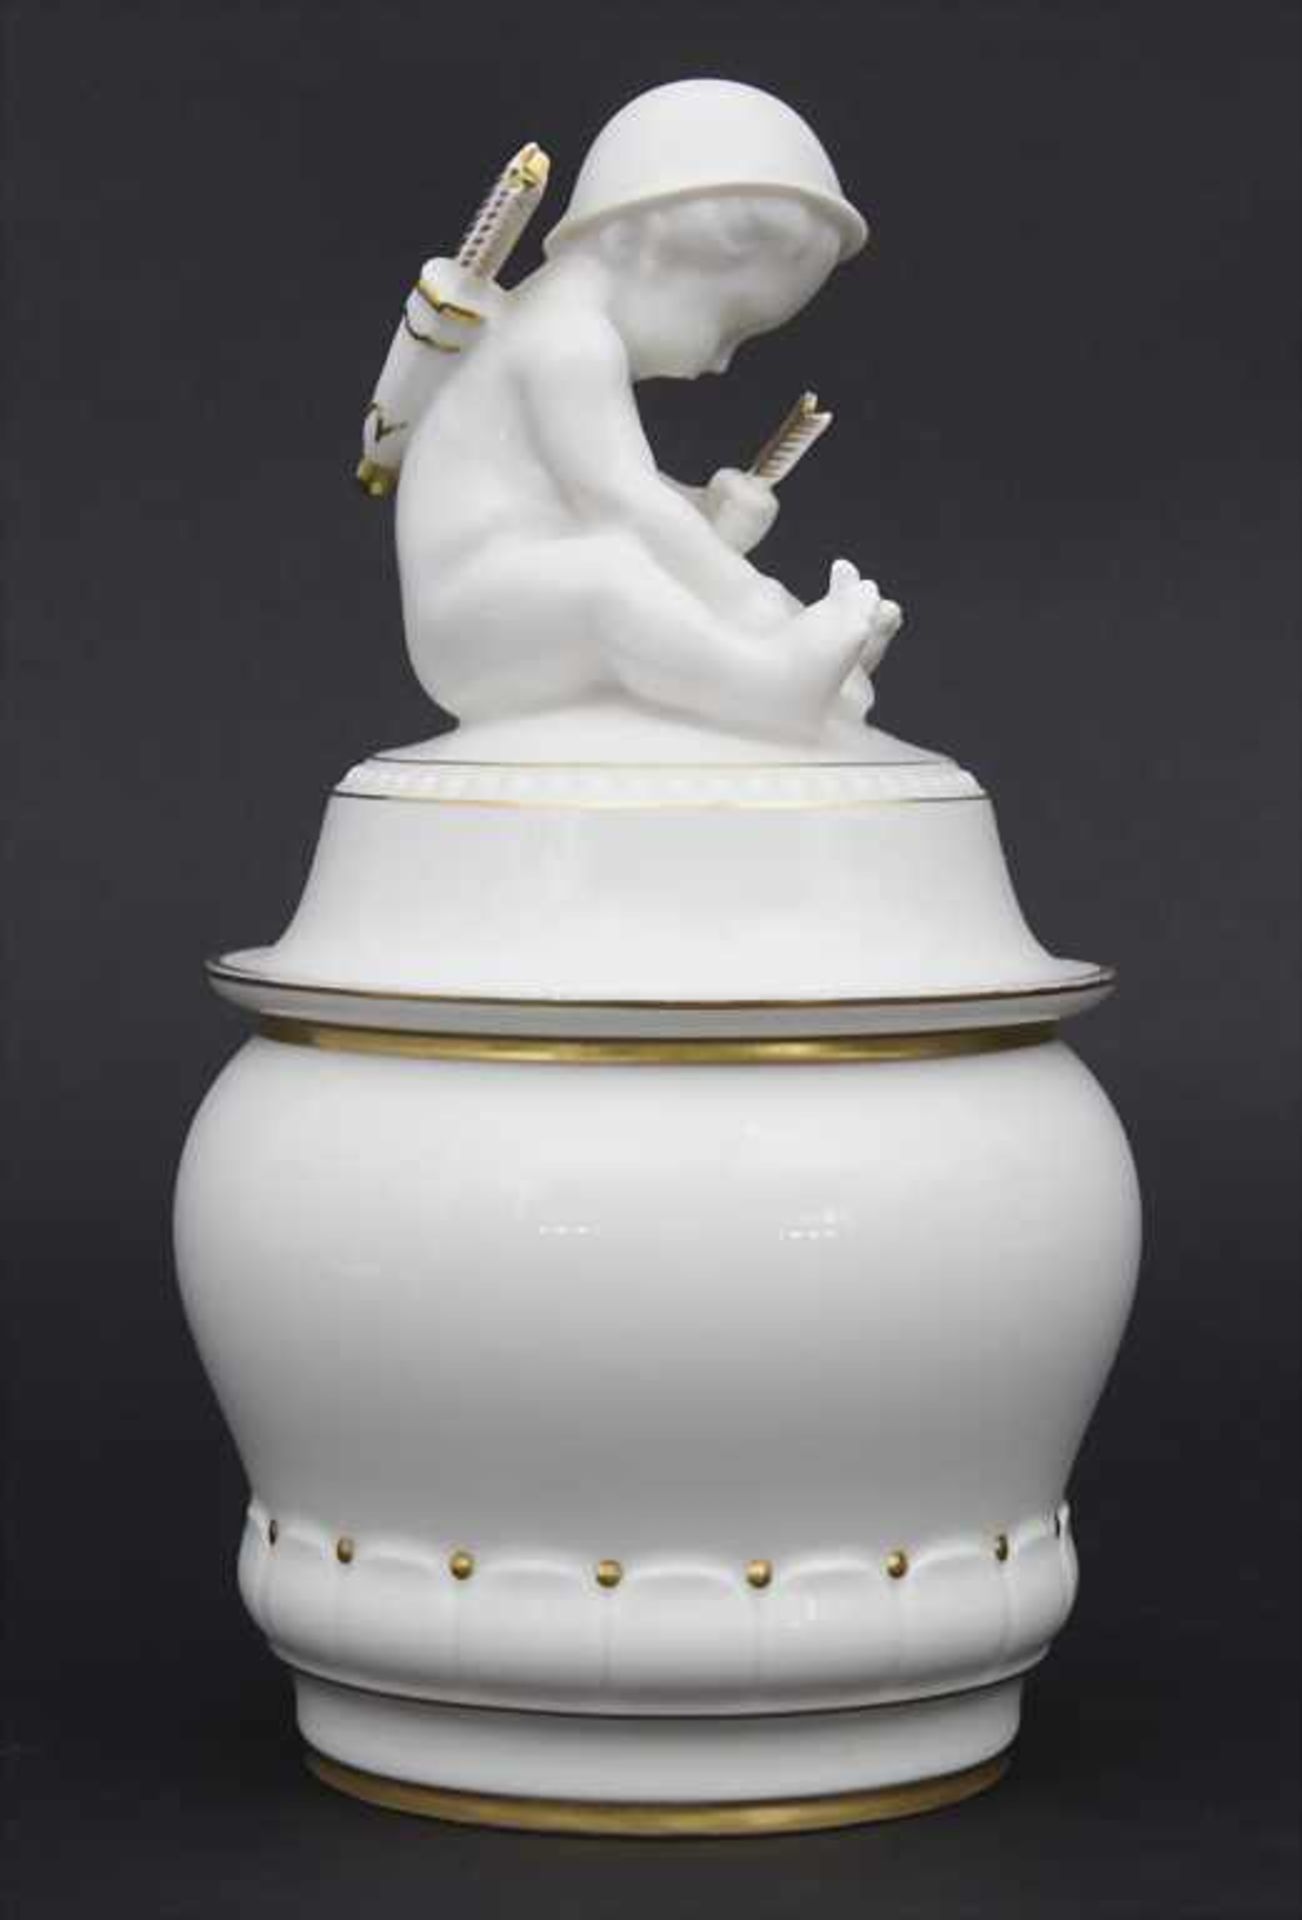 Art Déco Deckeldose mit Amorette / An Art Deco covered jar with a cupid, Lorenz Hutschenreuther, - Image 2 of 5